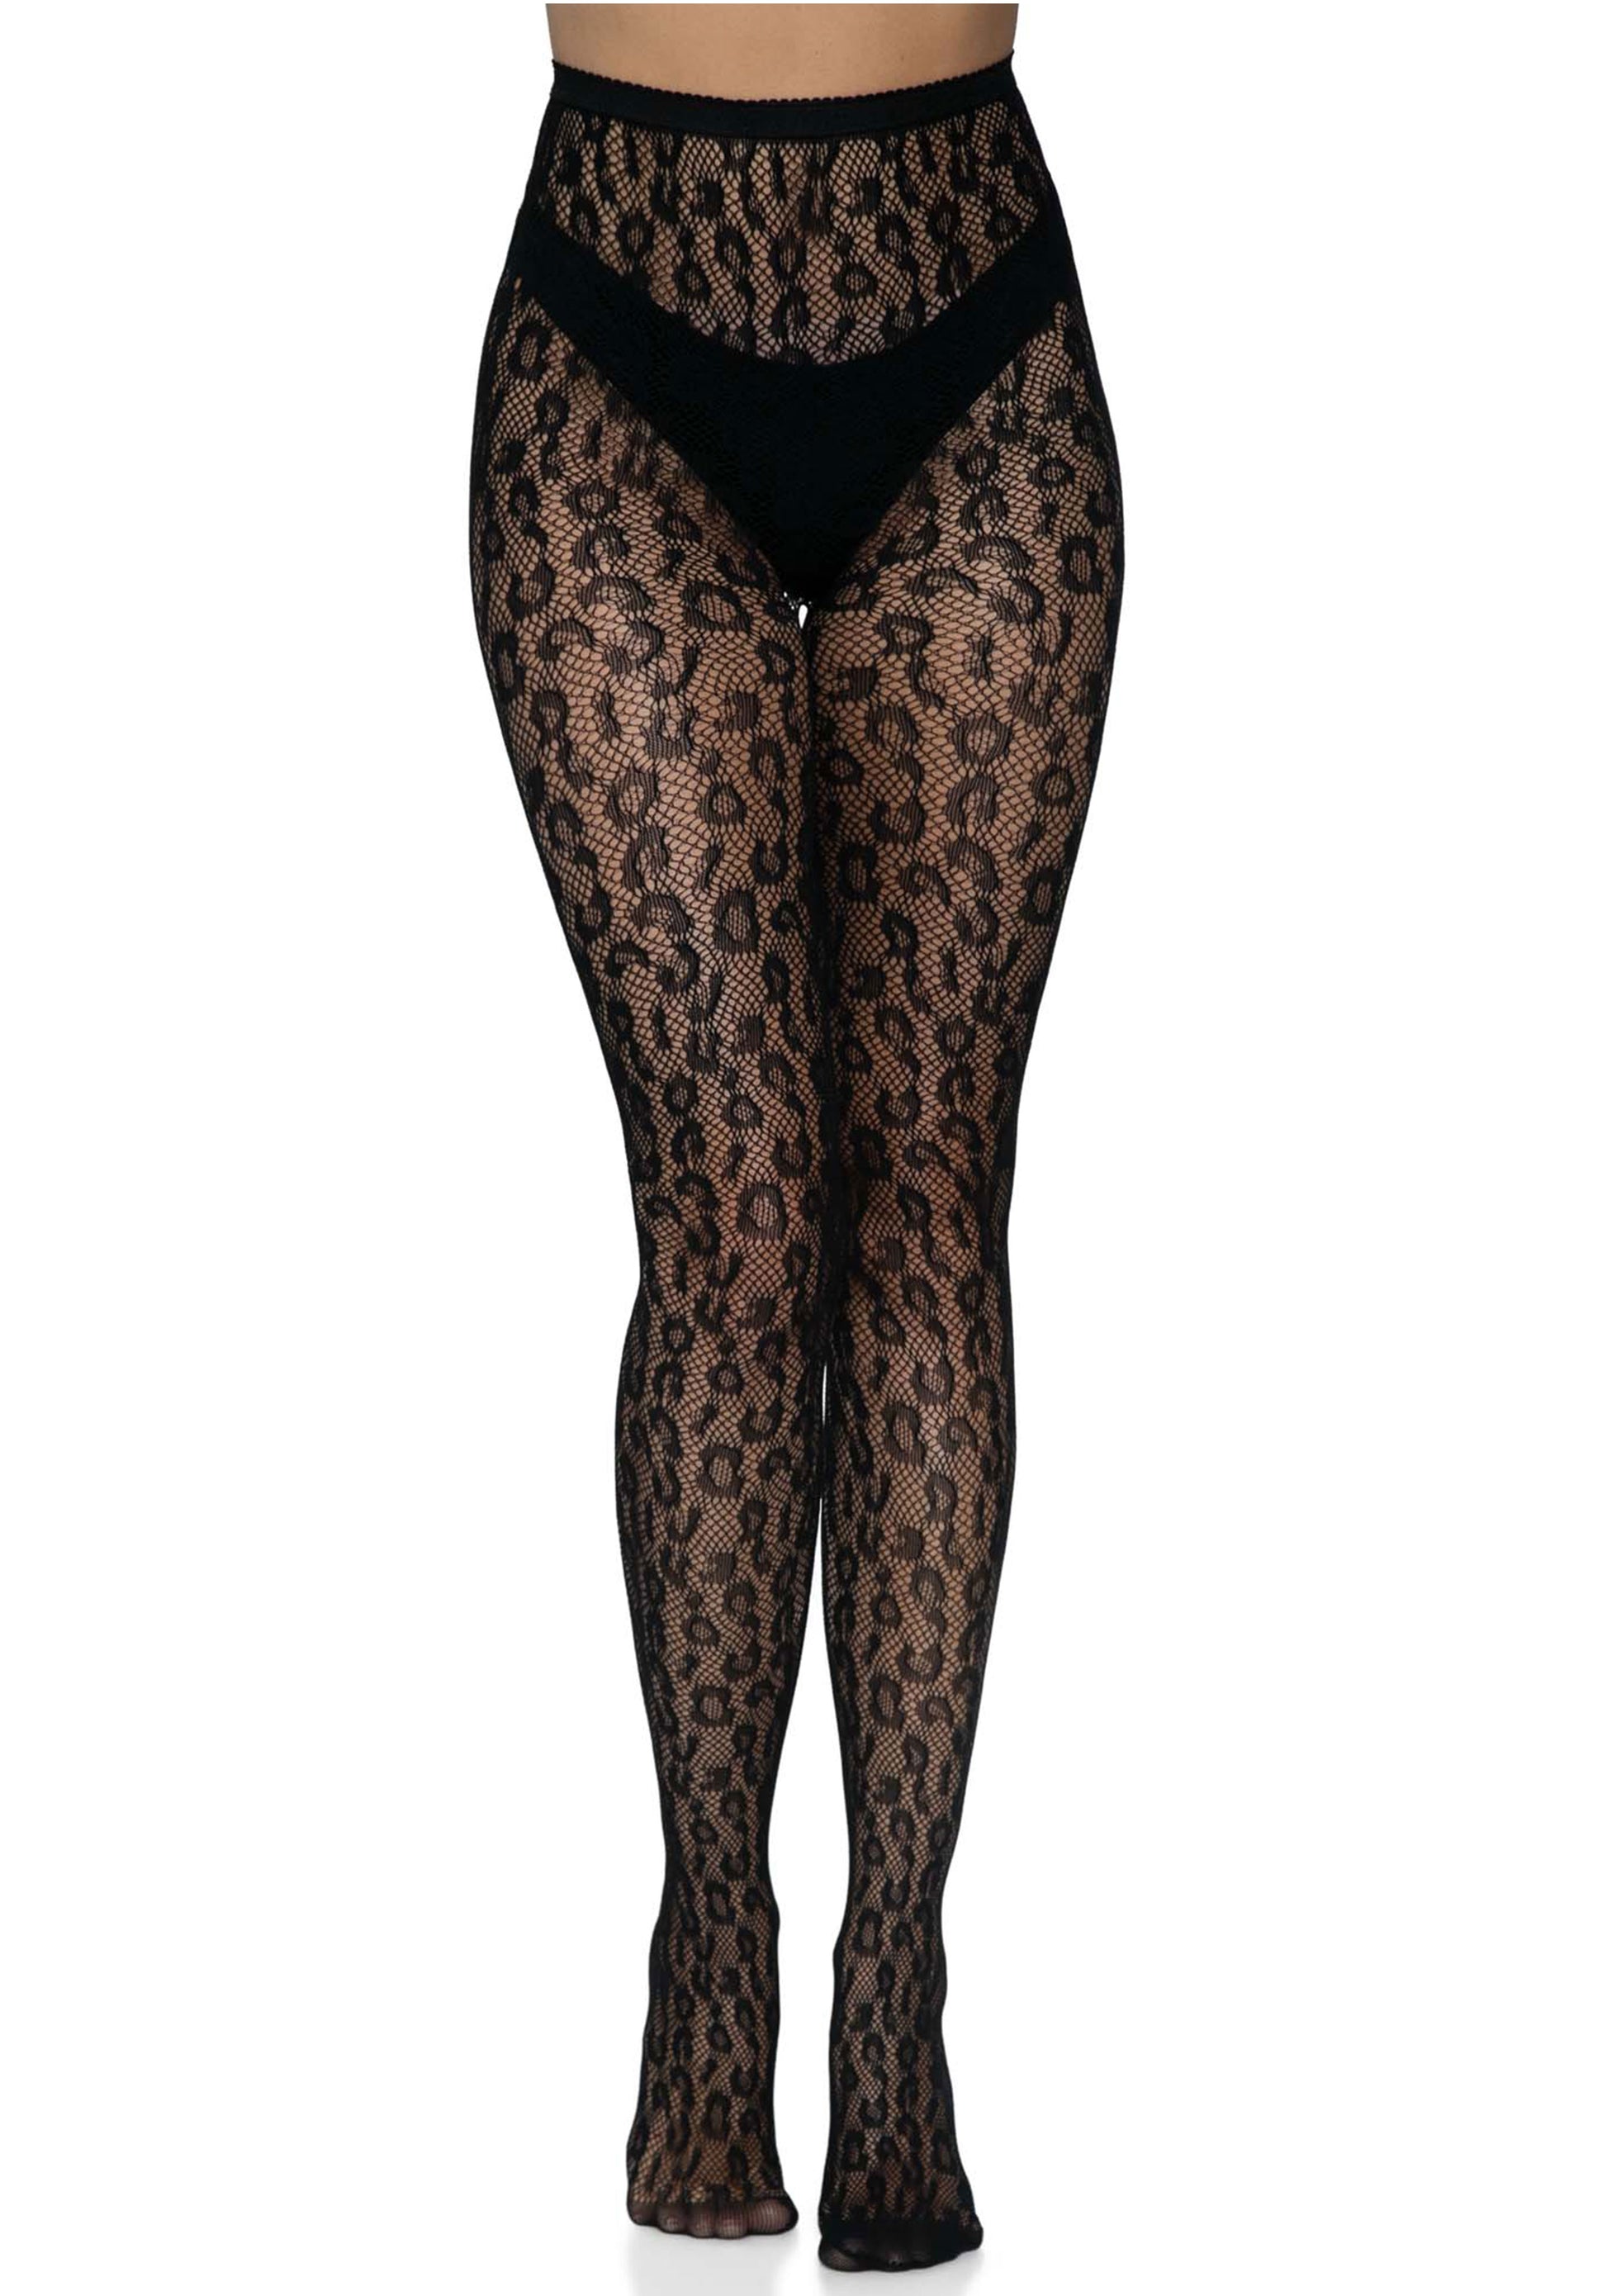 Leg Avenue 9716 Leopard Net Tights - Black fishnet tights with woven leopard print style pattern.